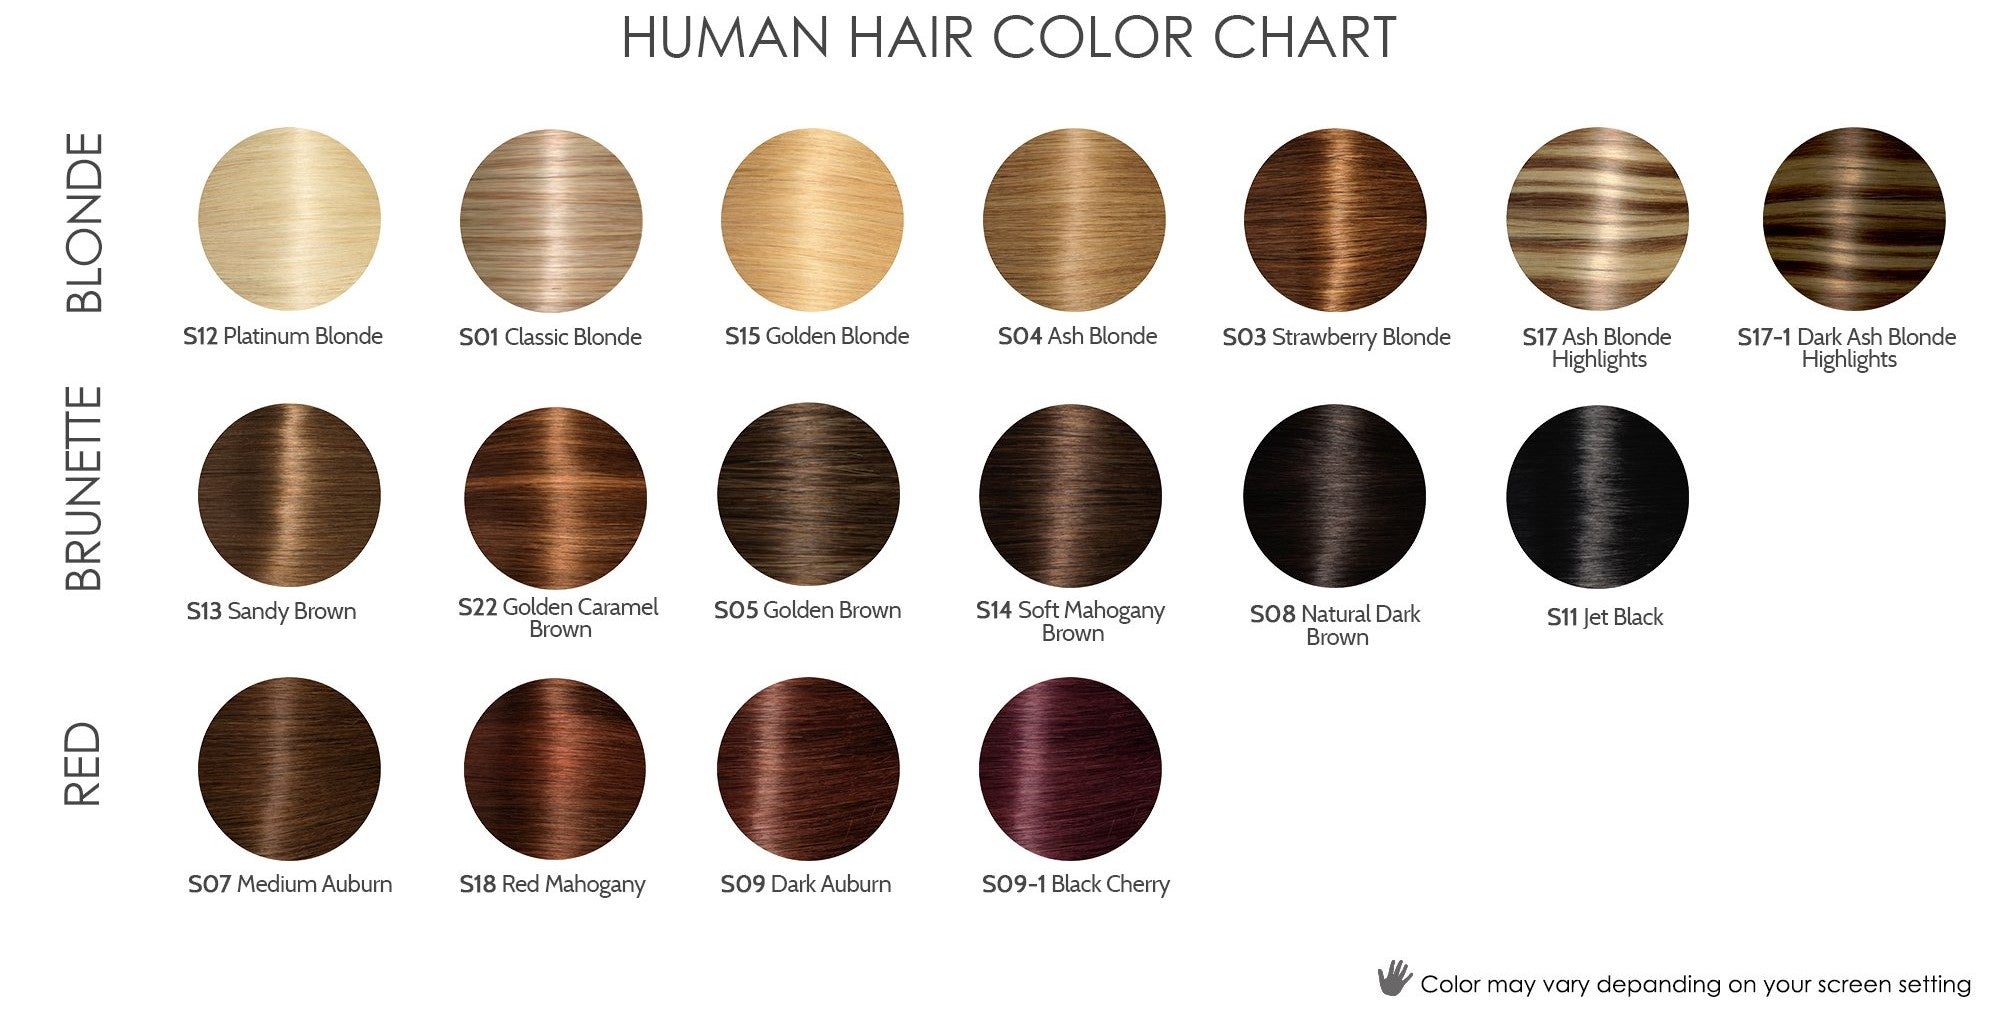 Human hair color  Wikipedia